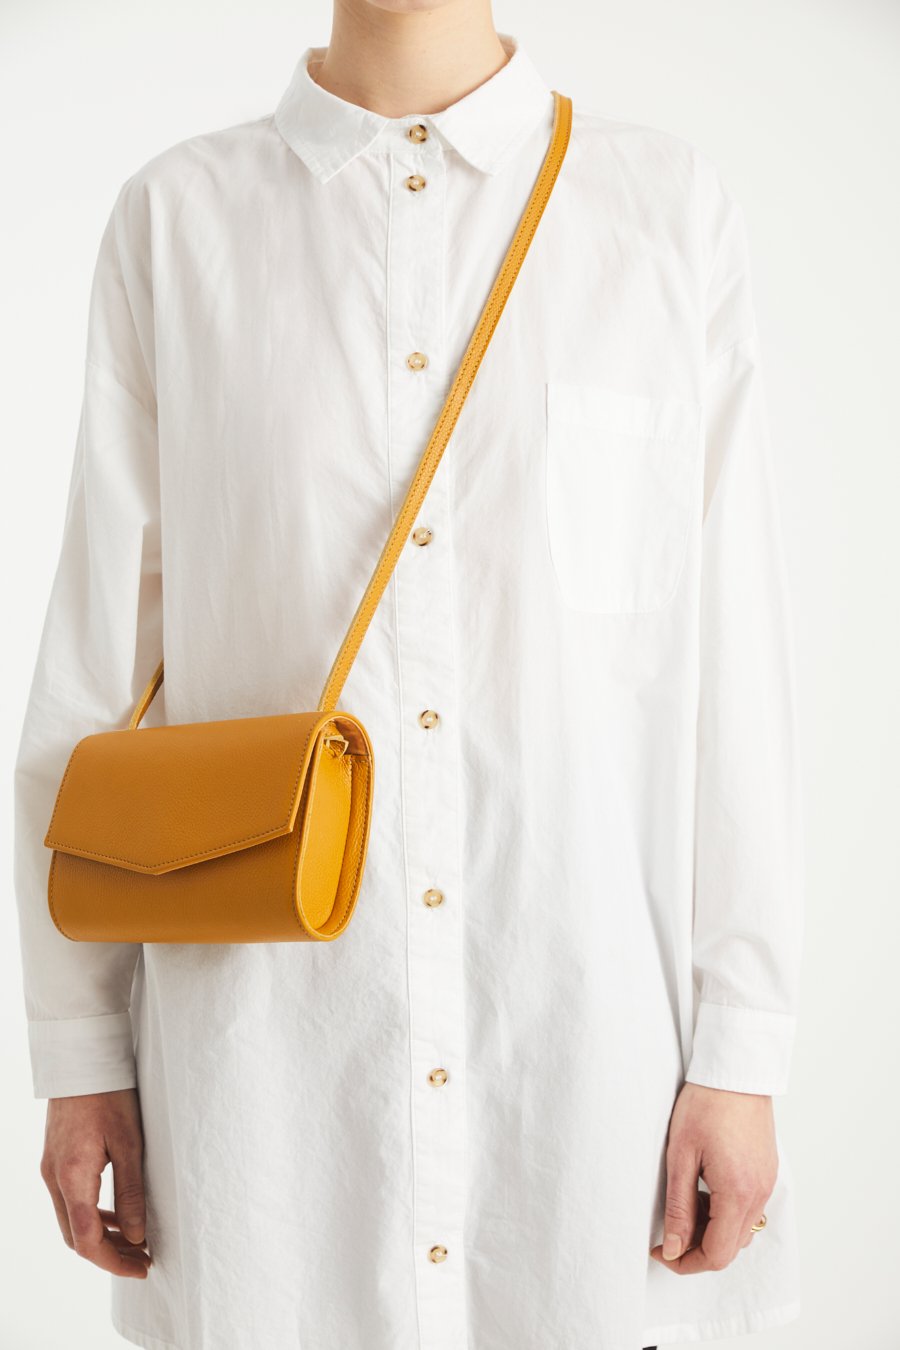 rita-row-women-accessories-2090-CO-bag-otti-mustard-4.jpg